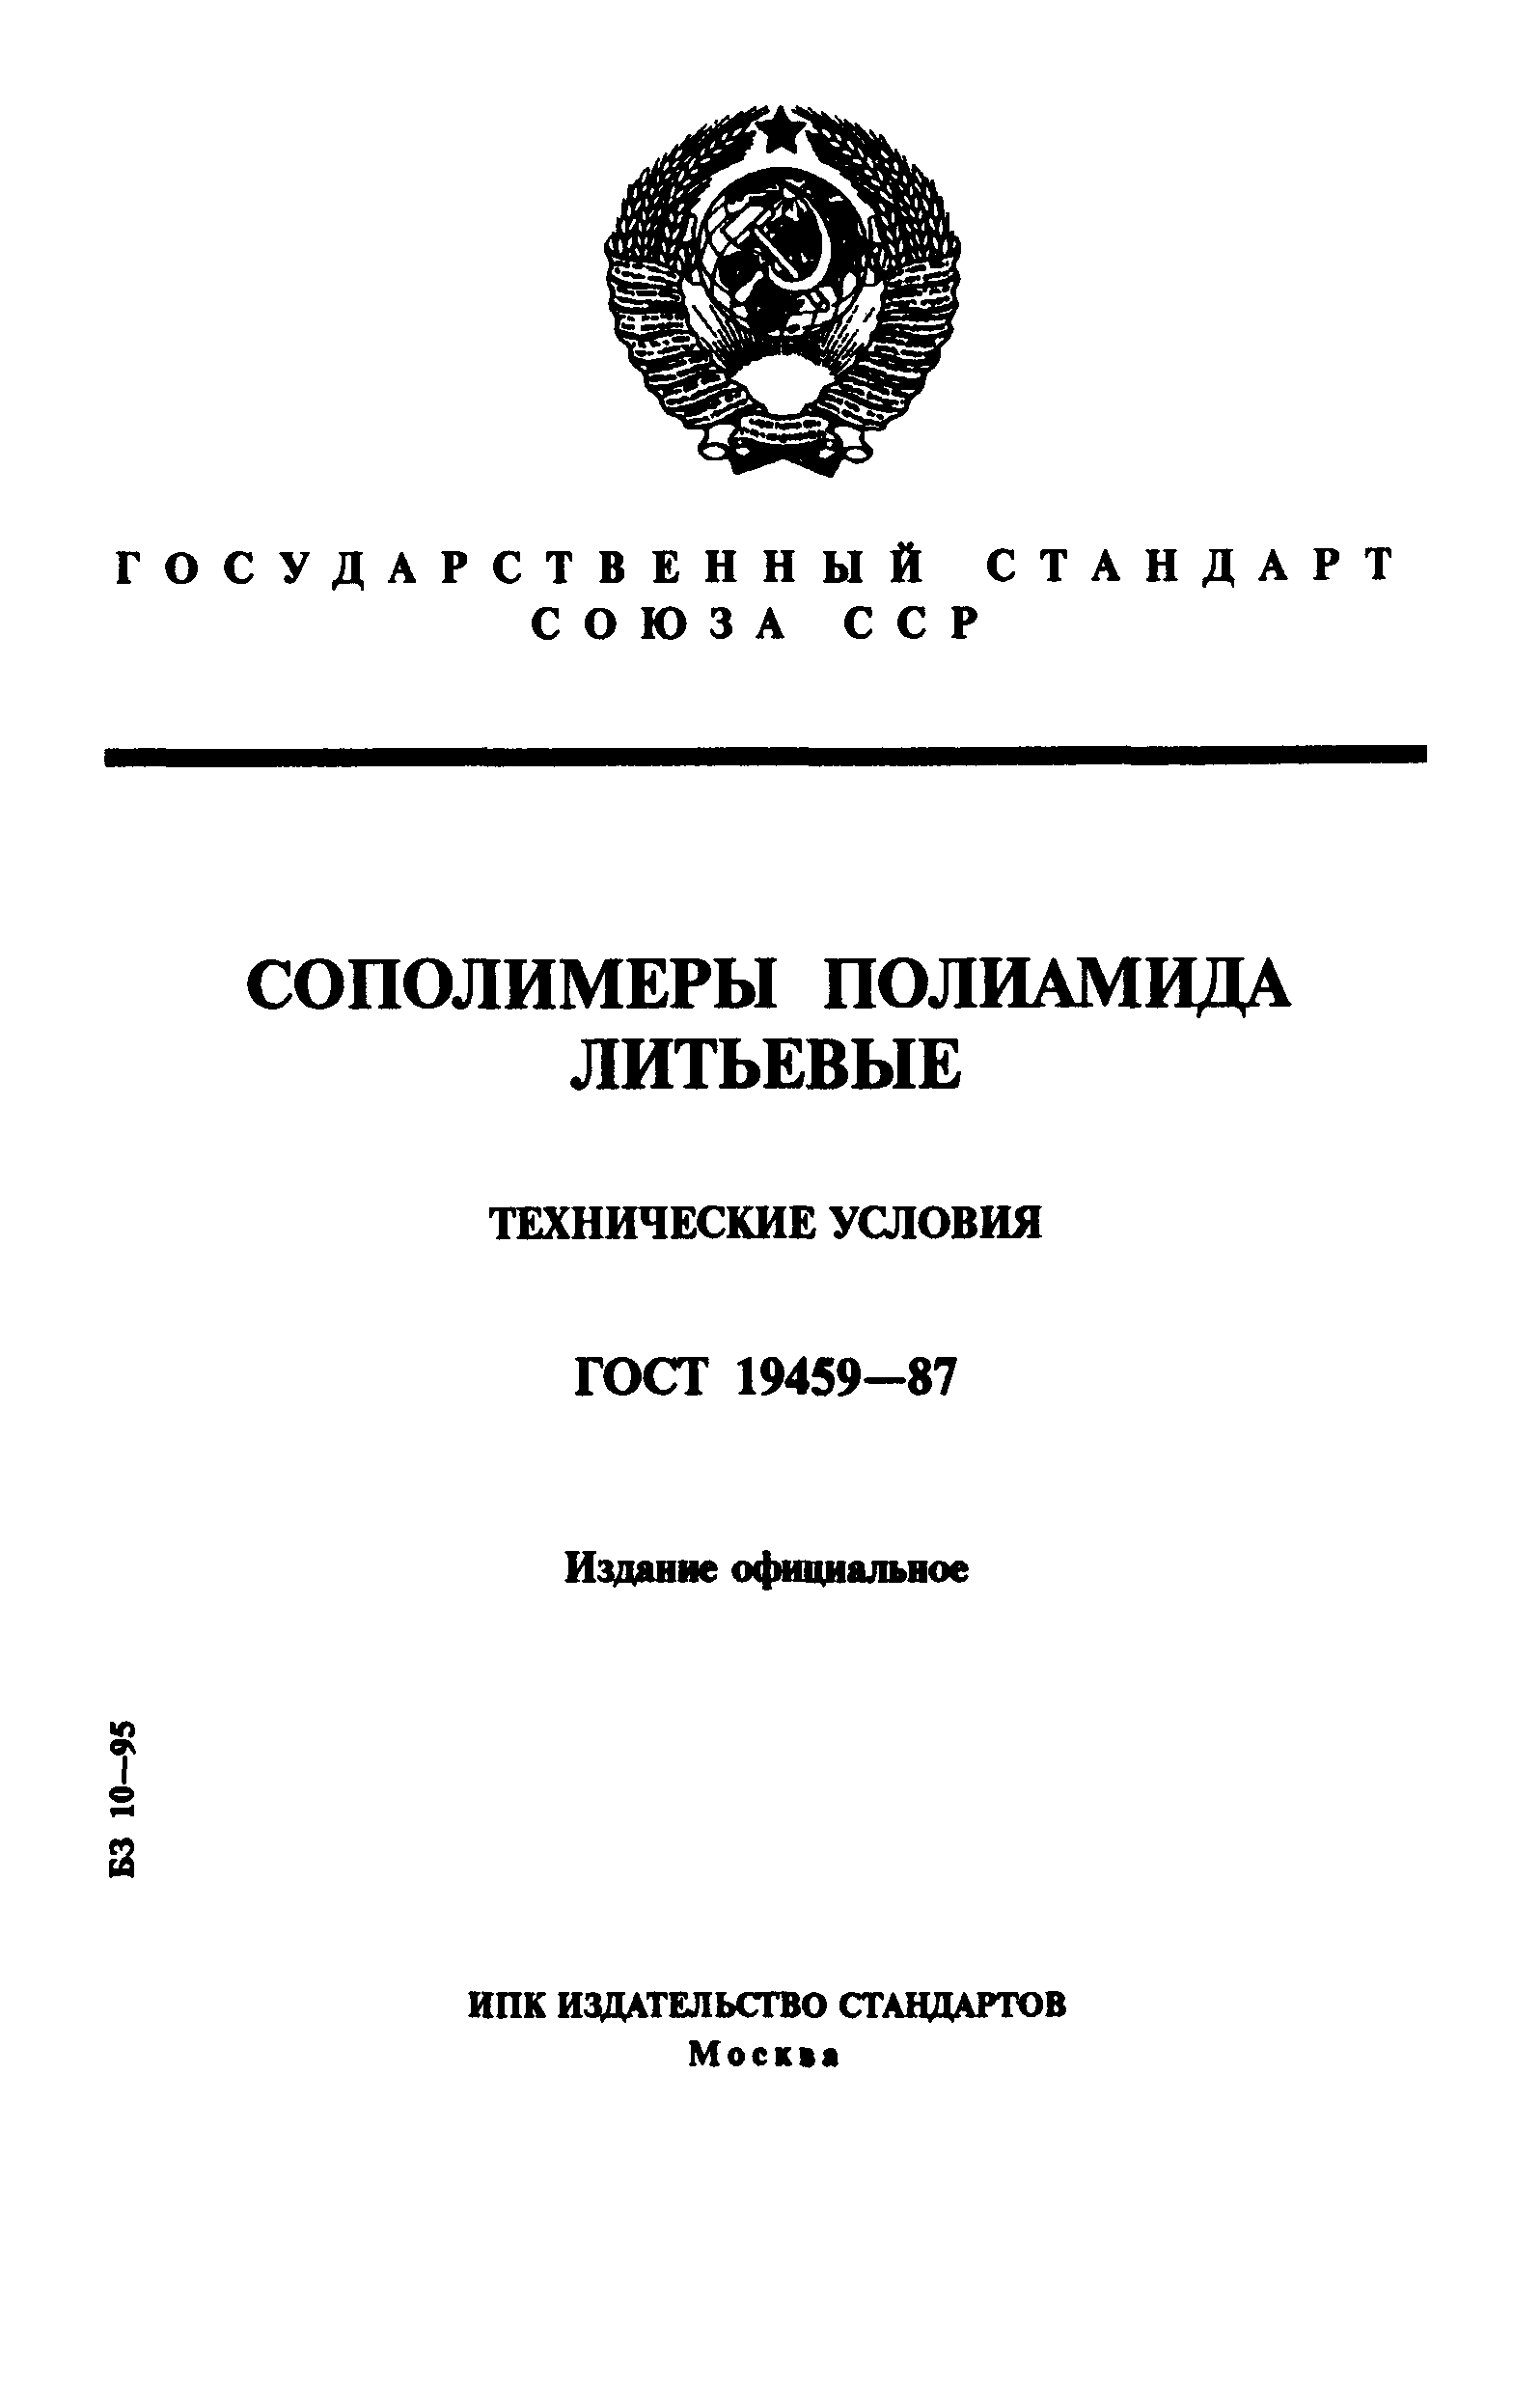 ГОСТ 19459-87